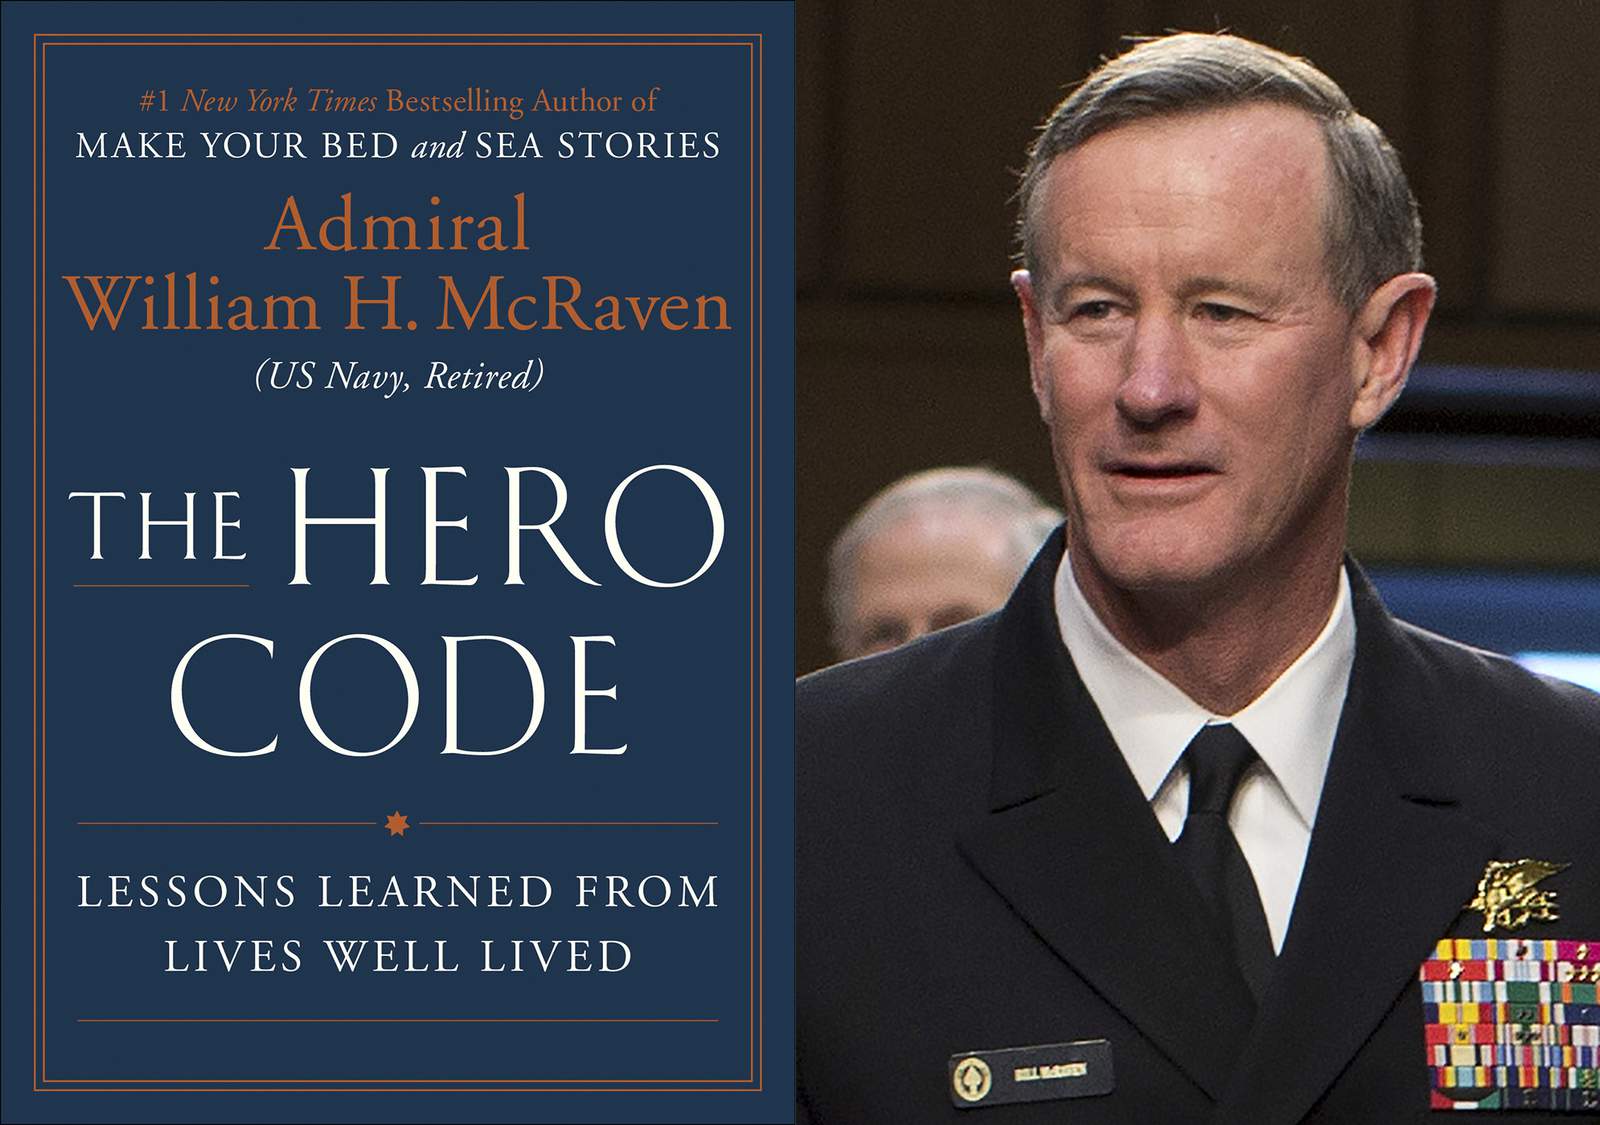 William McRaven's next book is called 'The Hero Code'